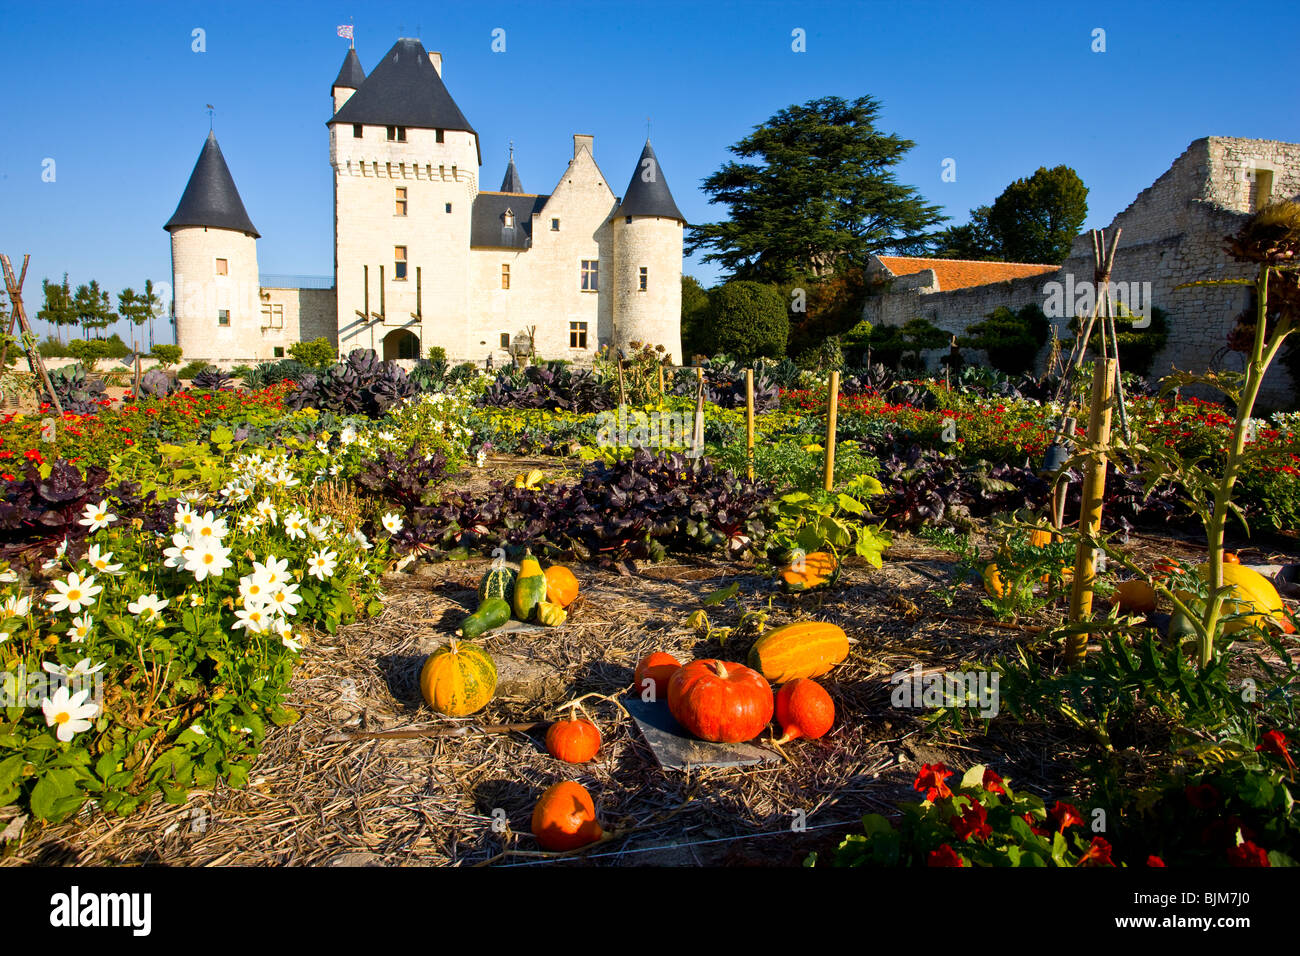 Schlosses Schloss und Gärten, Loiretal, Frankreich, UNESCO-Weltkulturerbe, 15. Jahrhundert Stockfoto